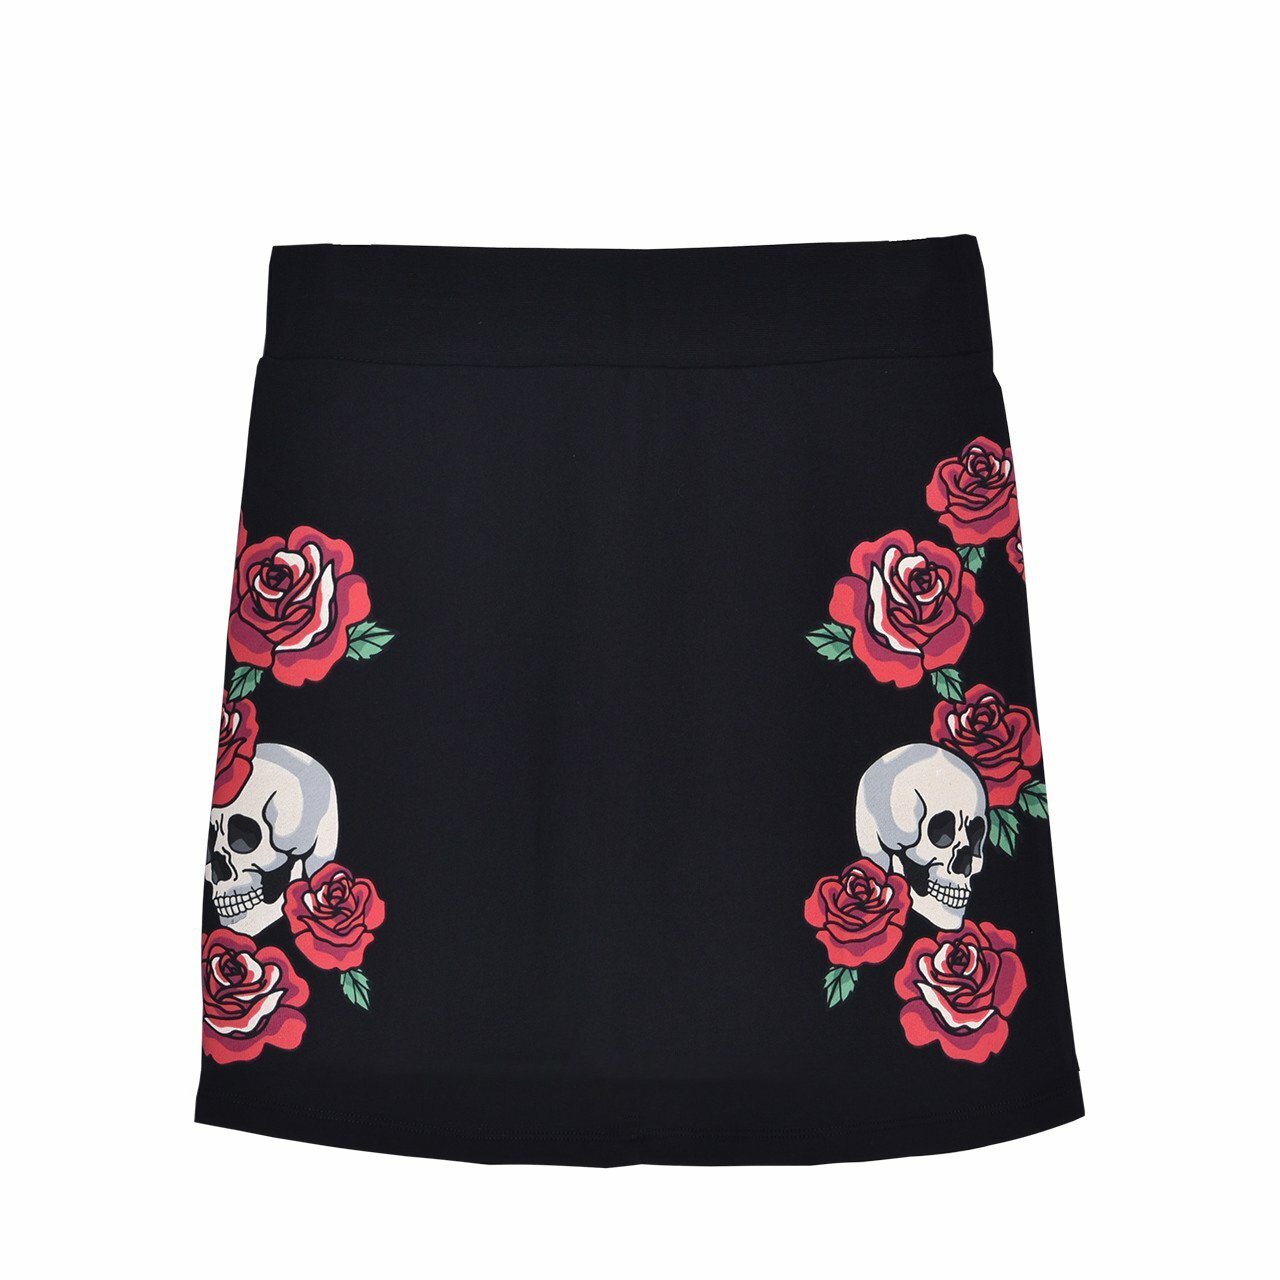 HARDY HARDY Skull With Roses Women's Skirt